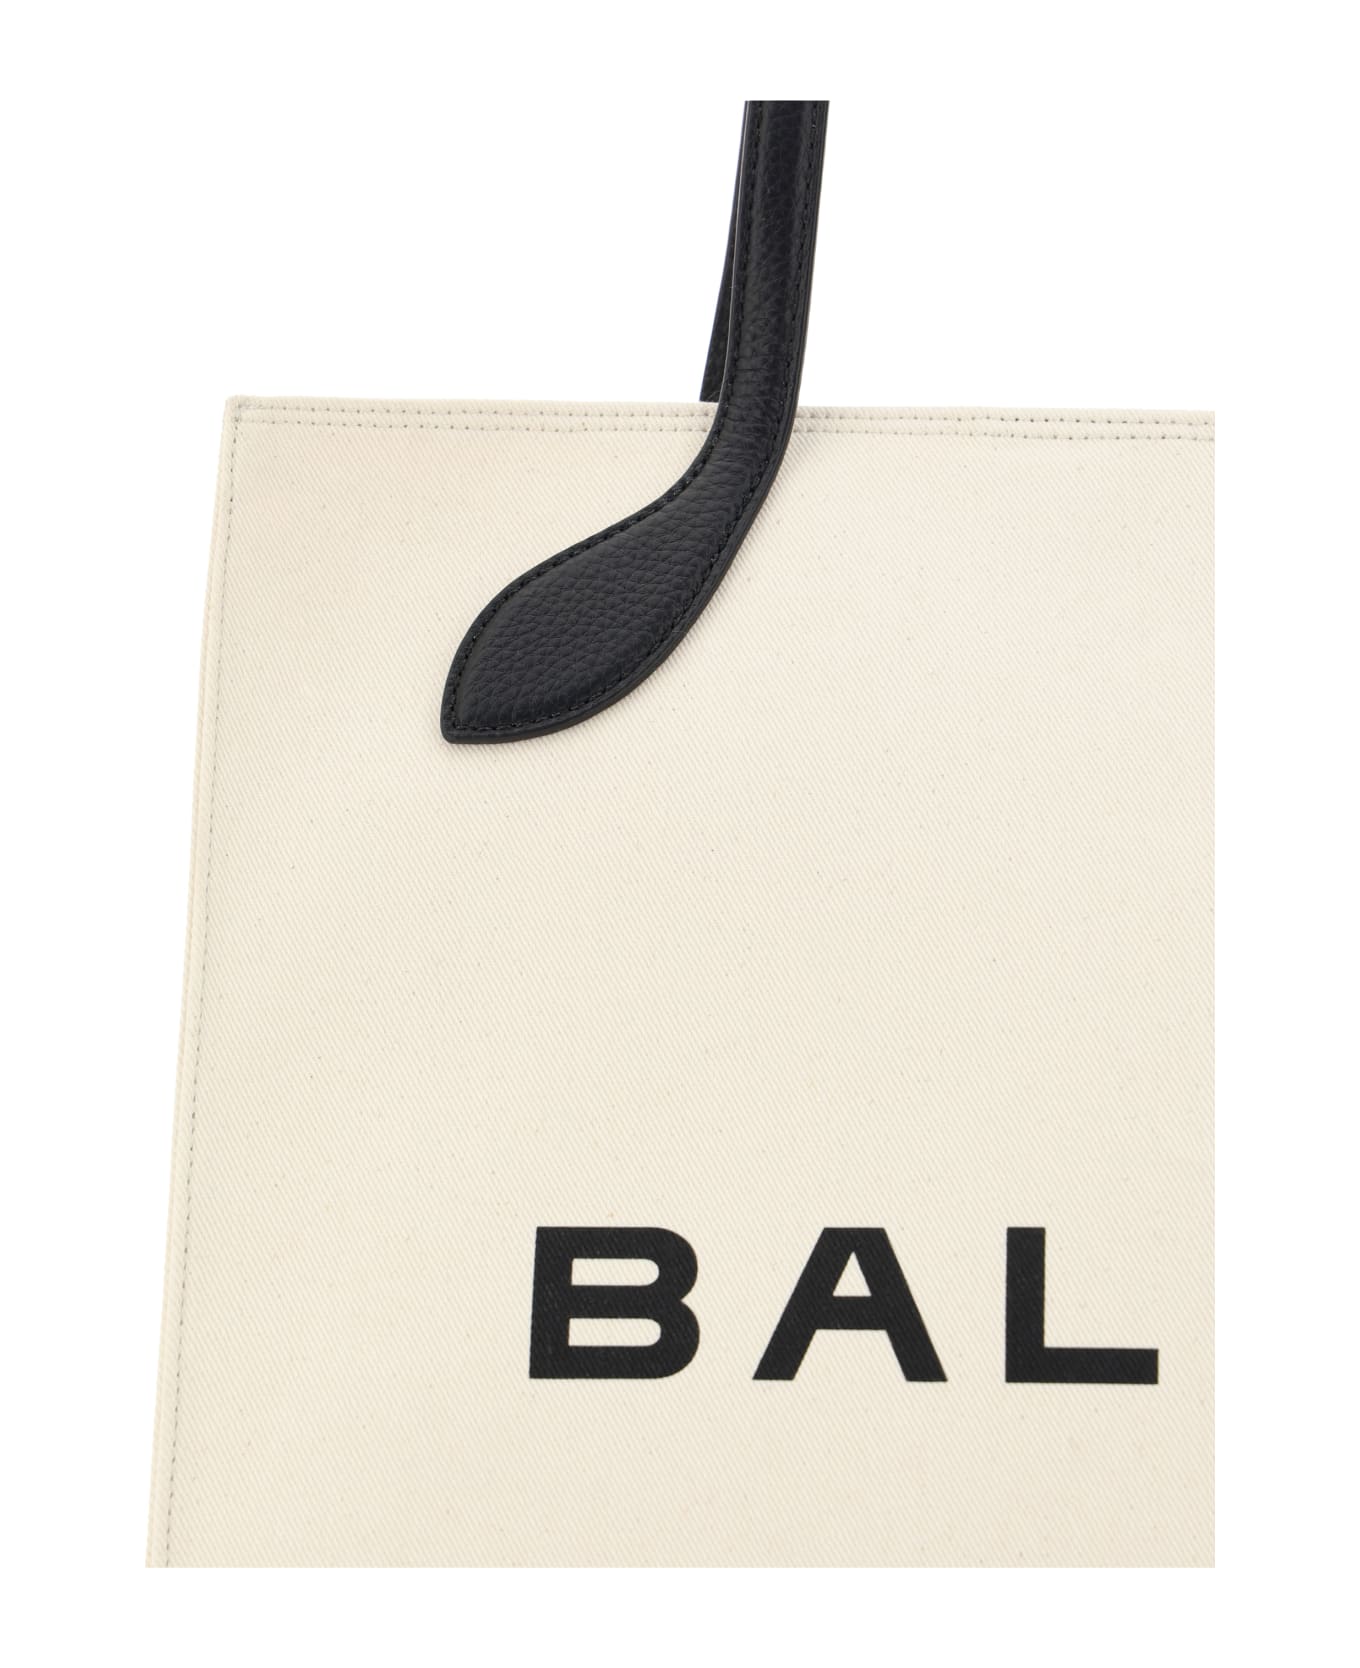 Bally Tote Handbag - White トートバッグ